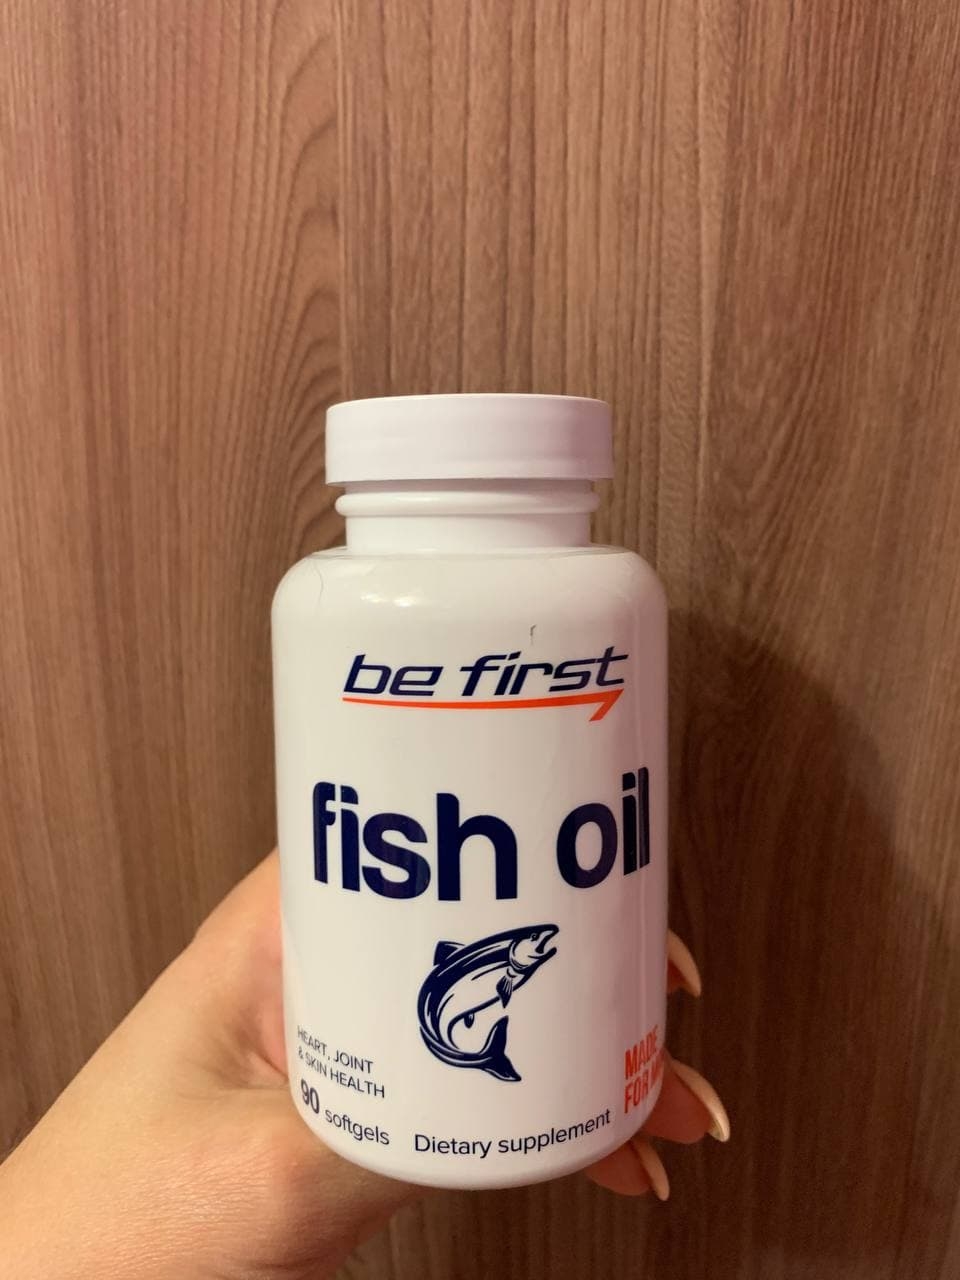 Be First Рыбный жир Fish Oil - Отличный рыбий жир